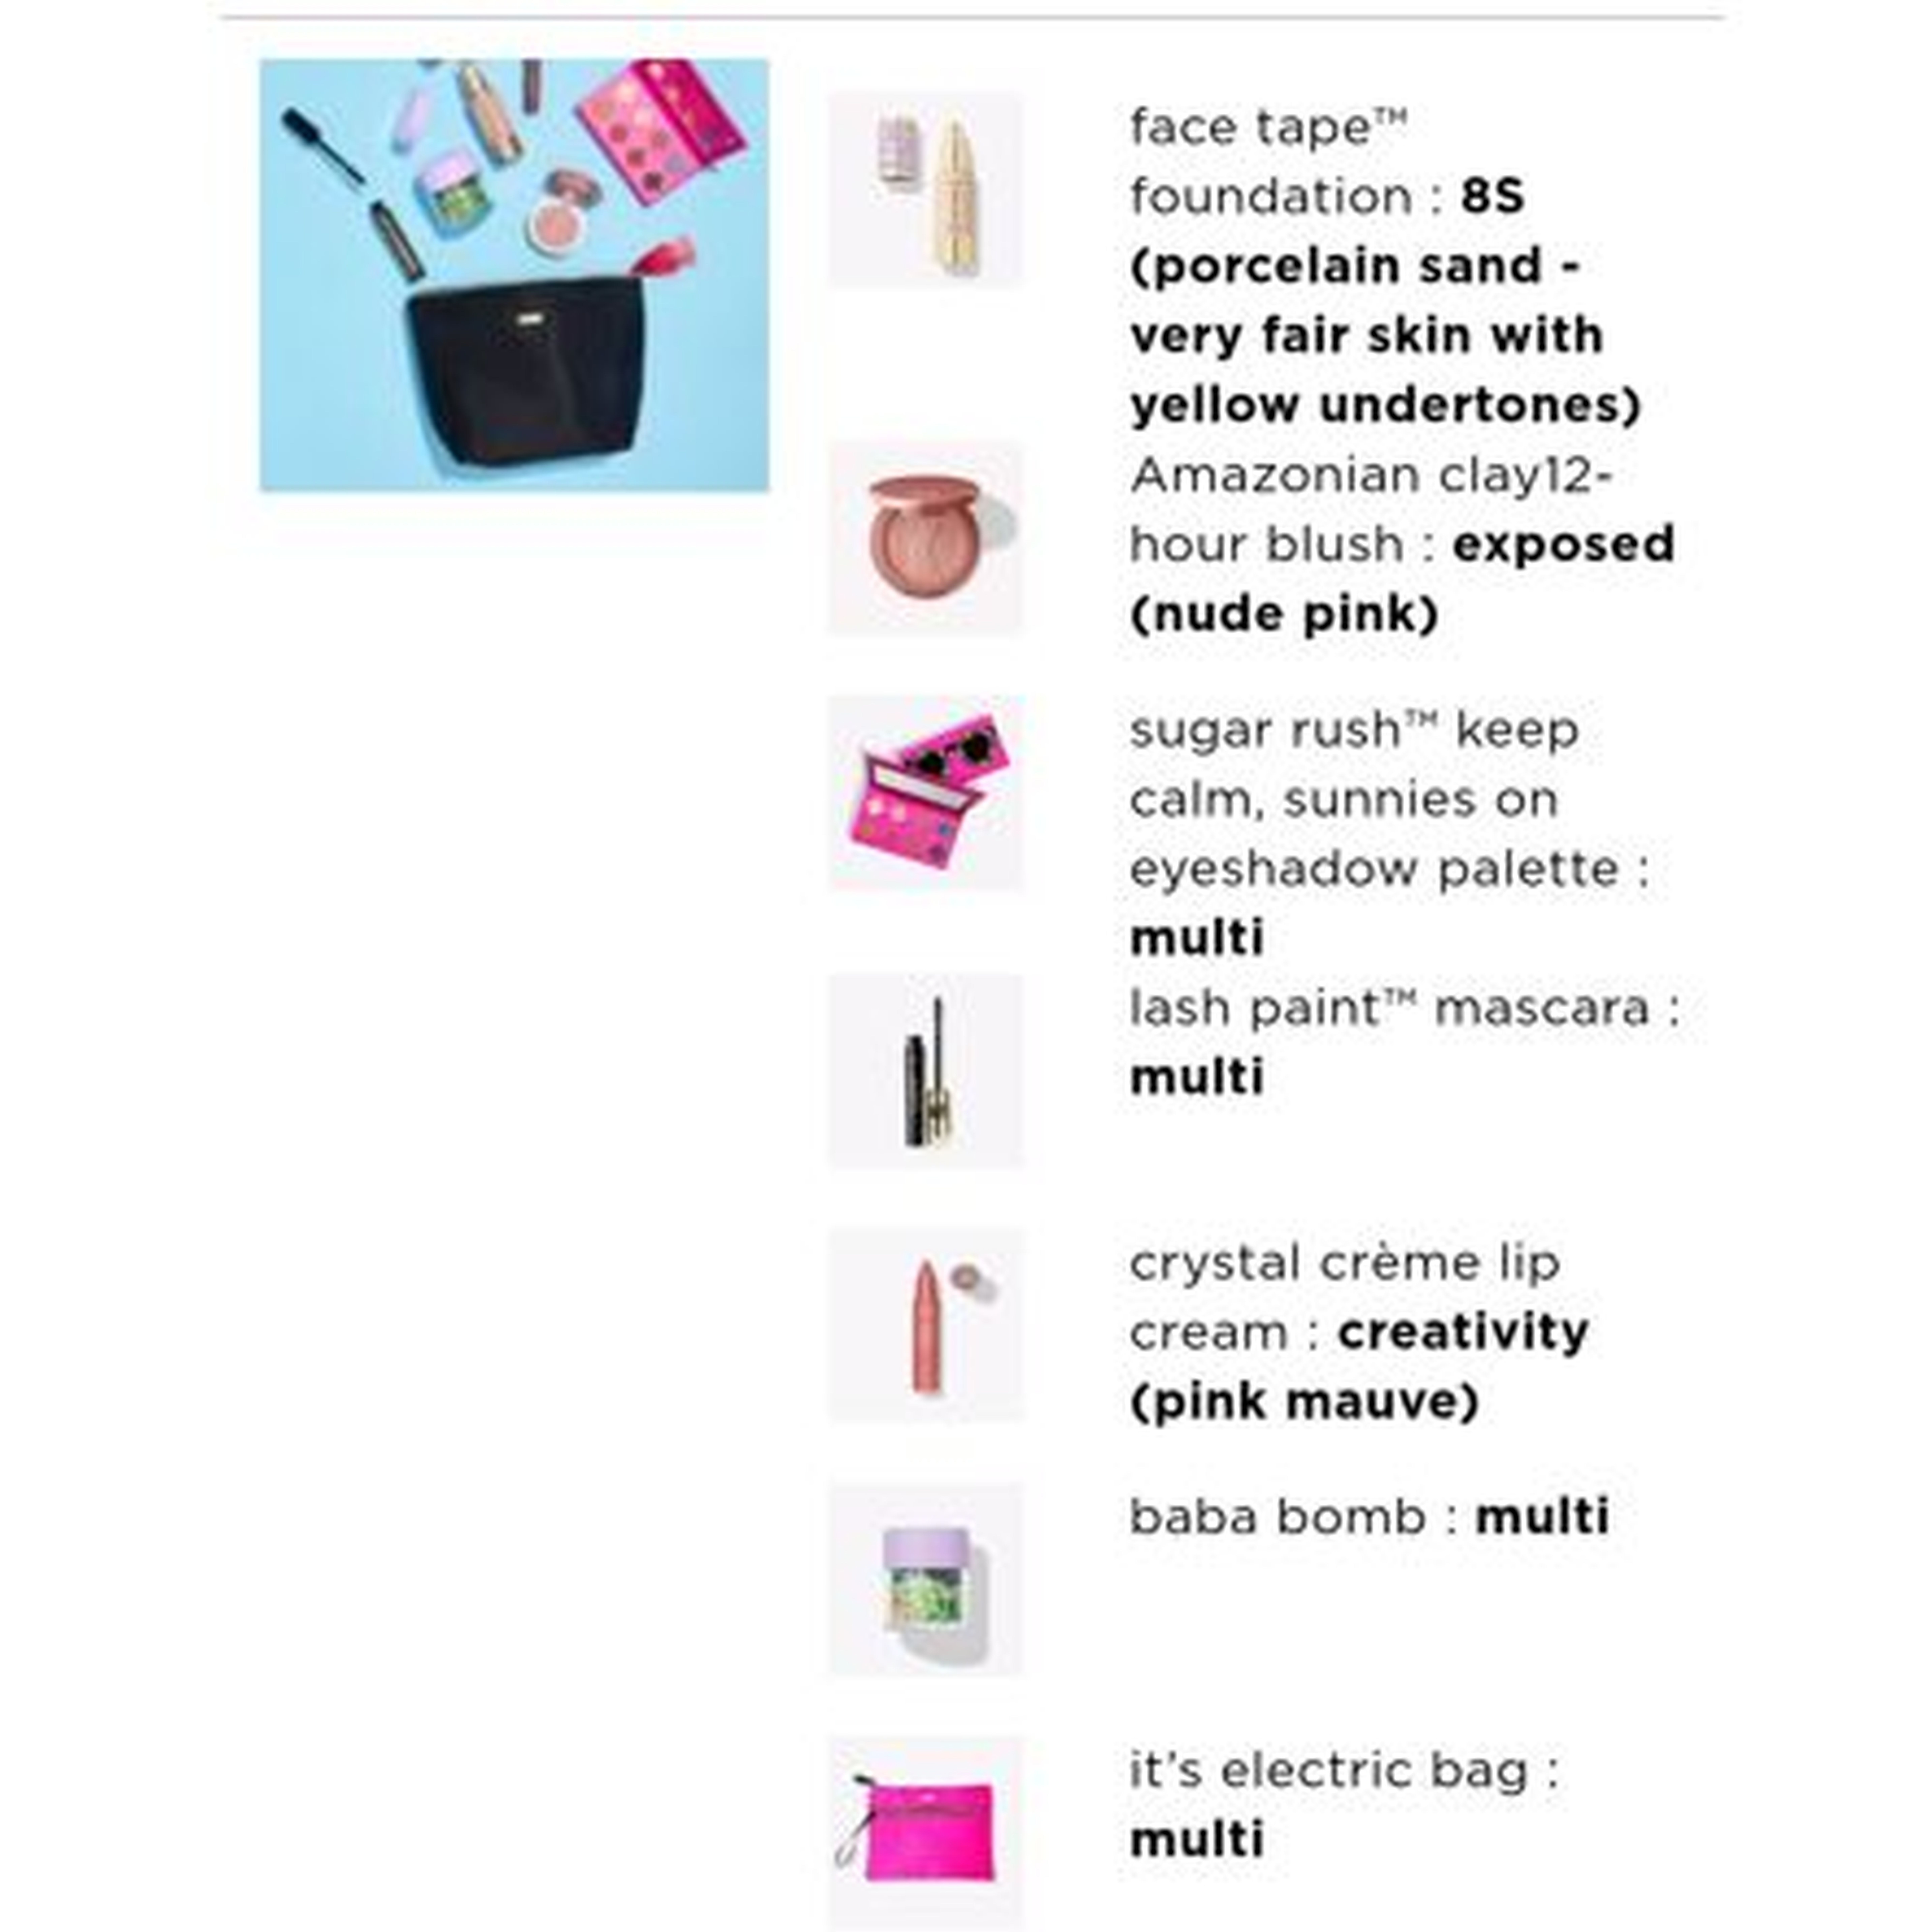 Tarte Create Your Own Beauty Kit June 2020 order summary